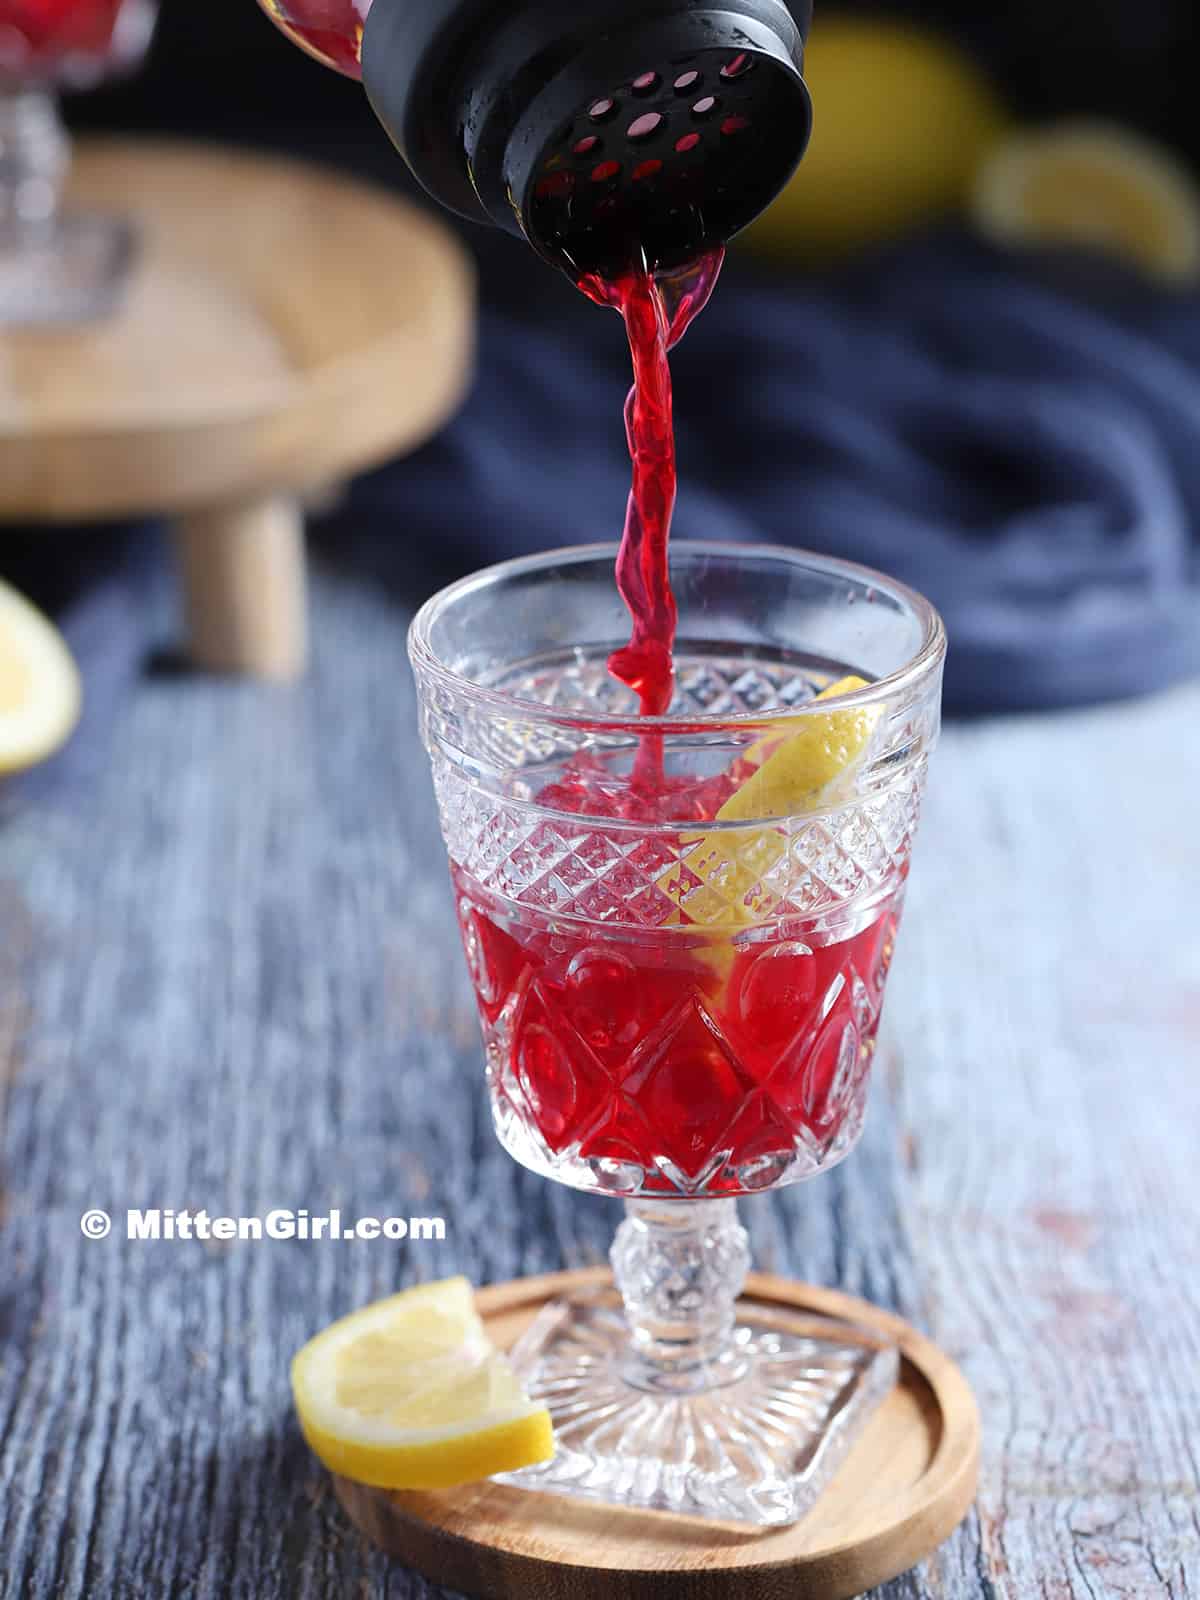 Pouring blueberry lemonade mixture into a glass.